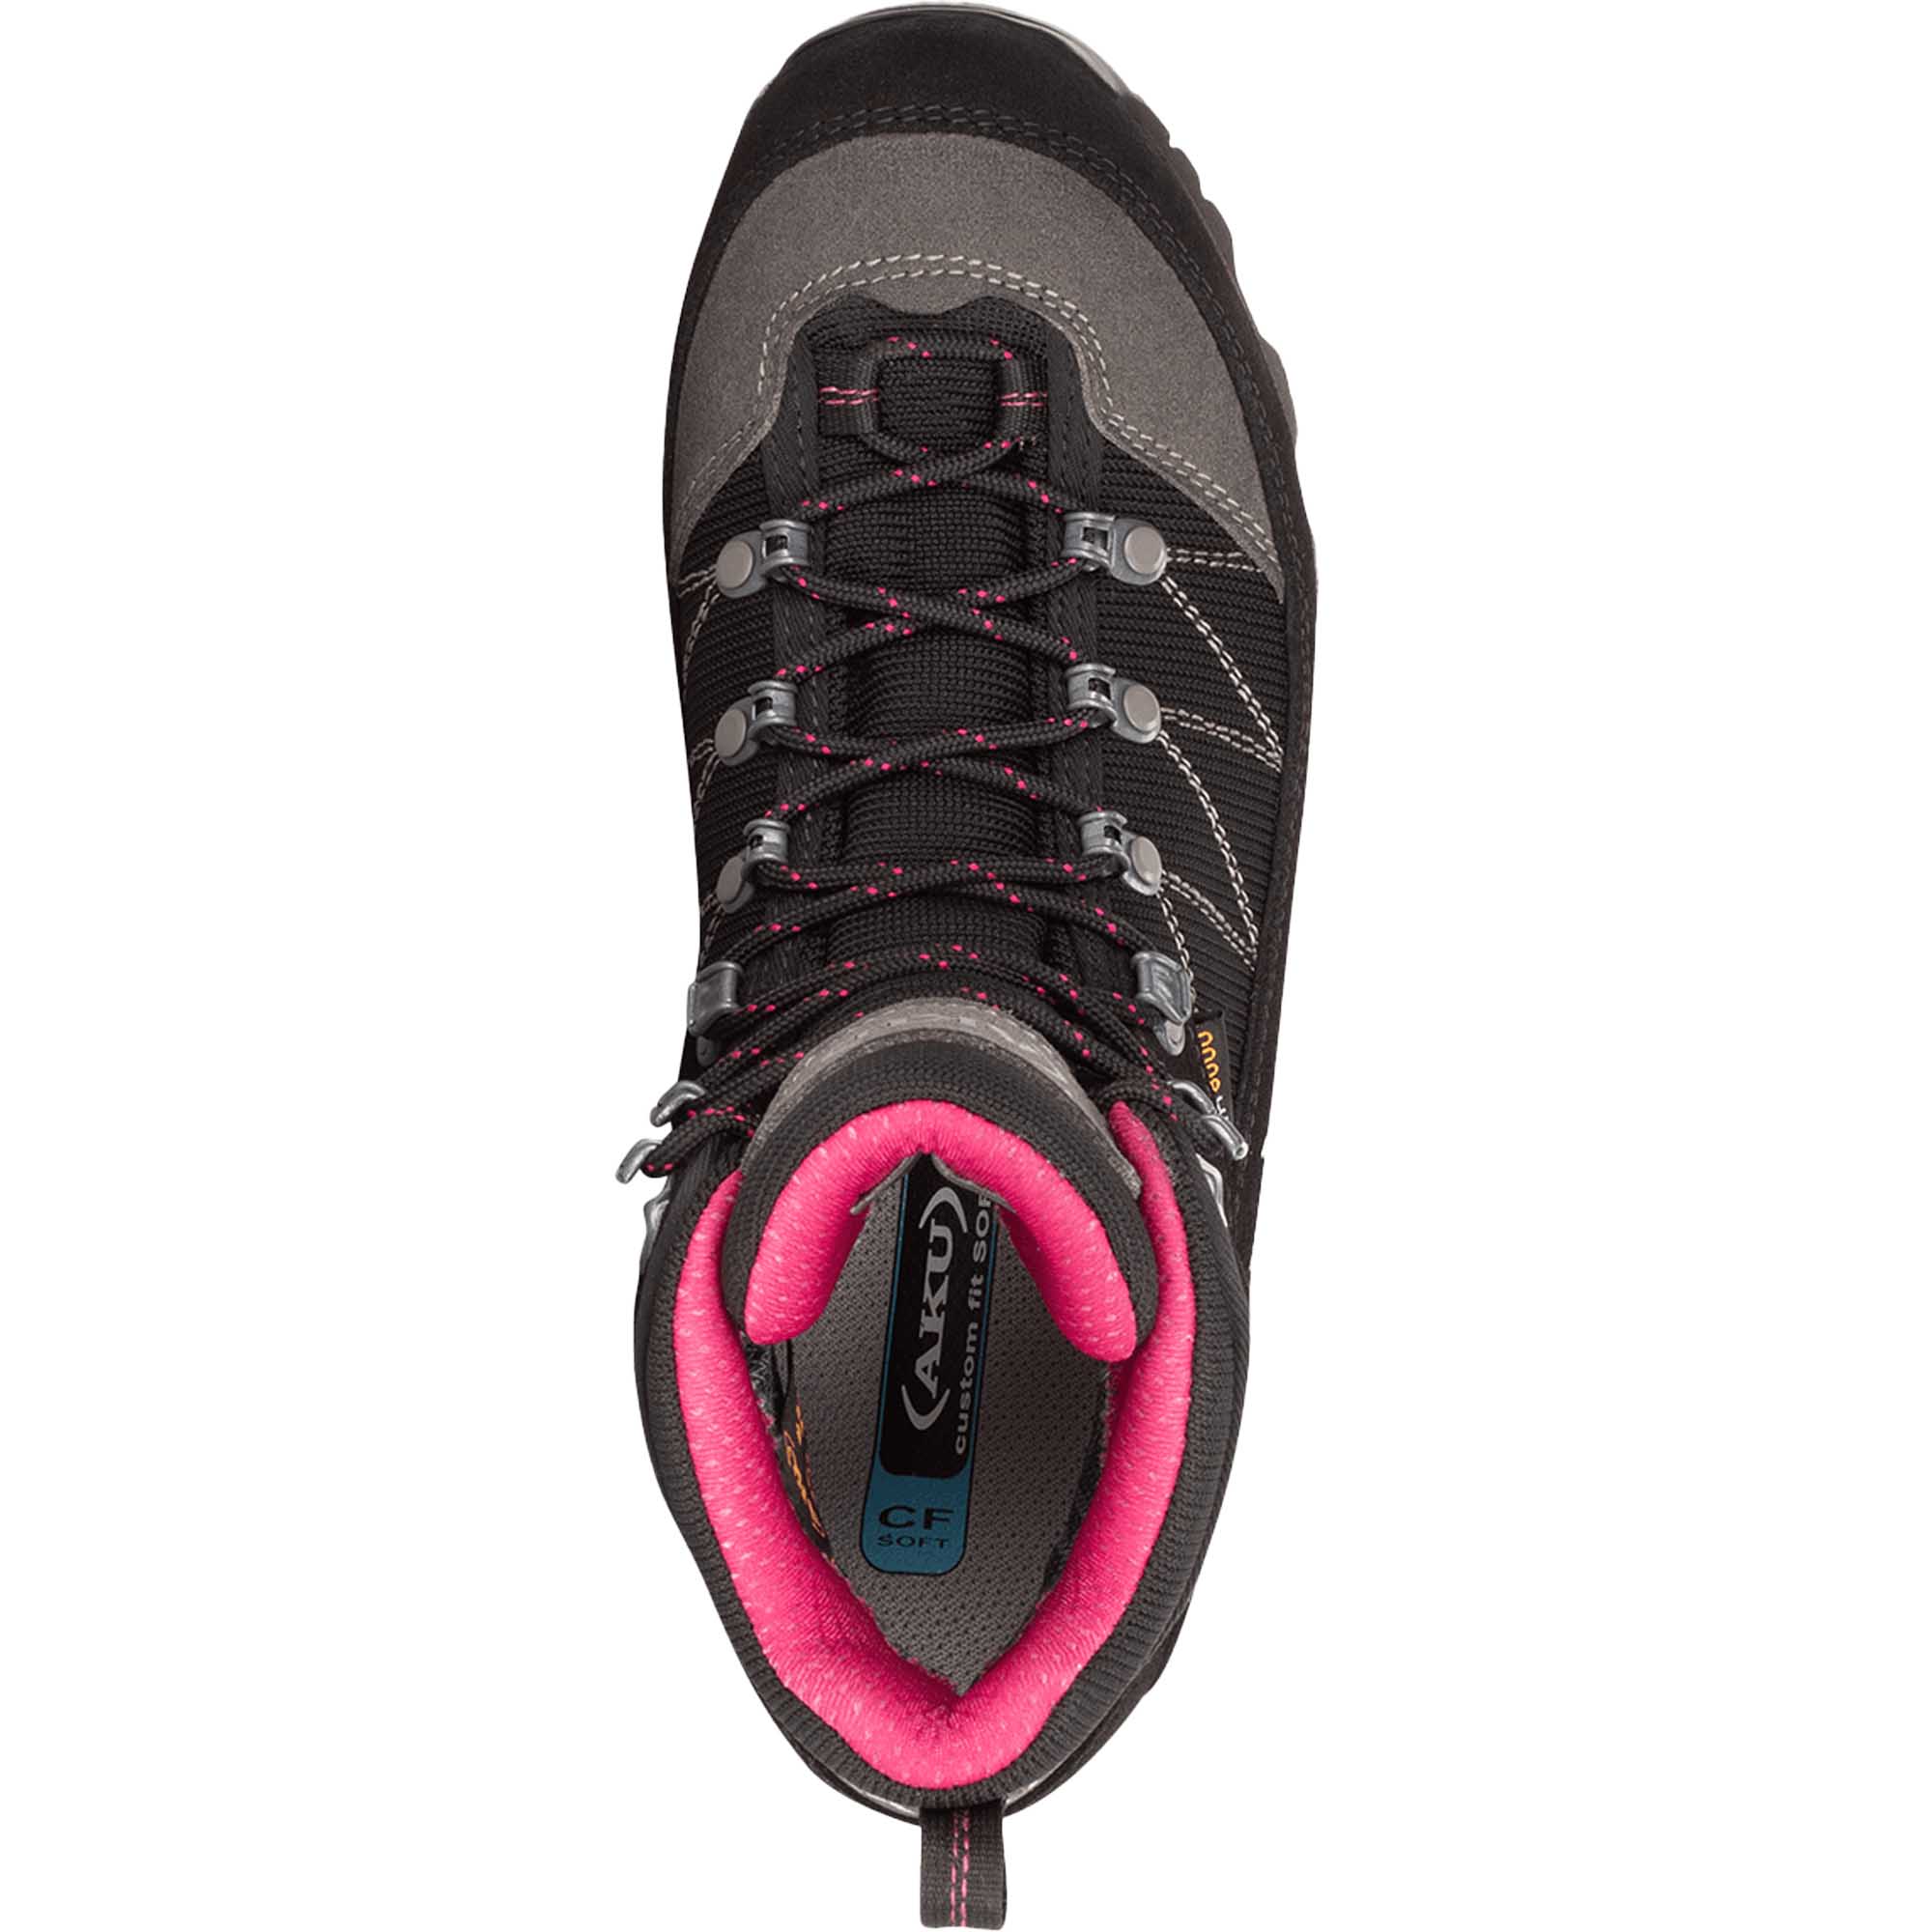 Aku Trekker Lite III GTX Women's Hiking Boots